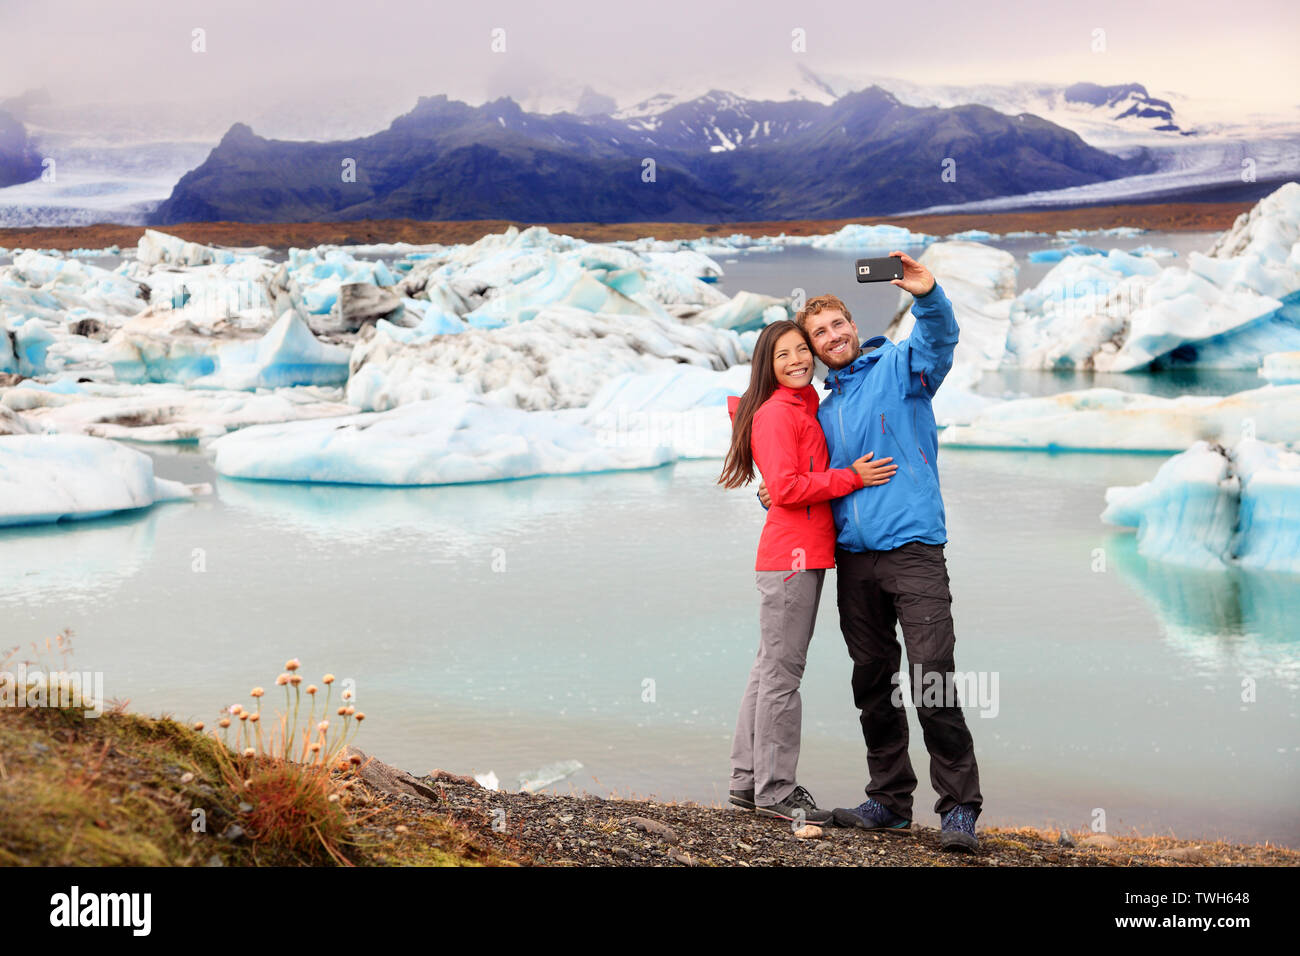 Iceland - couple taking selfie self portrait photo by Jokulsarlon glacial lagoon / glacier lake. Happy tourists on travel enjoying beautiful Icelandic nature landscape with Vatnajokull in backround. Stock Photo